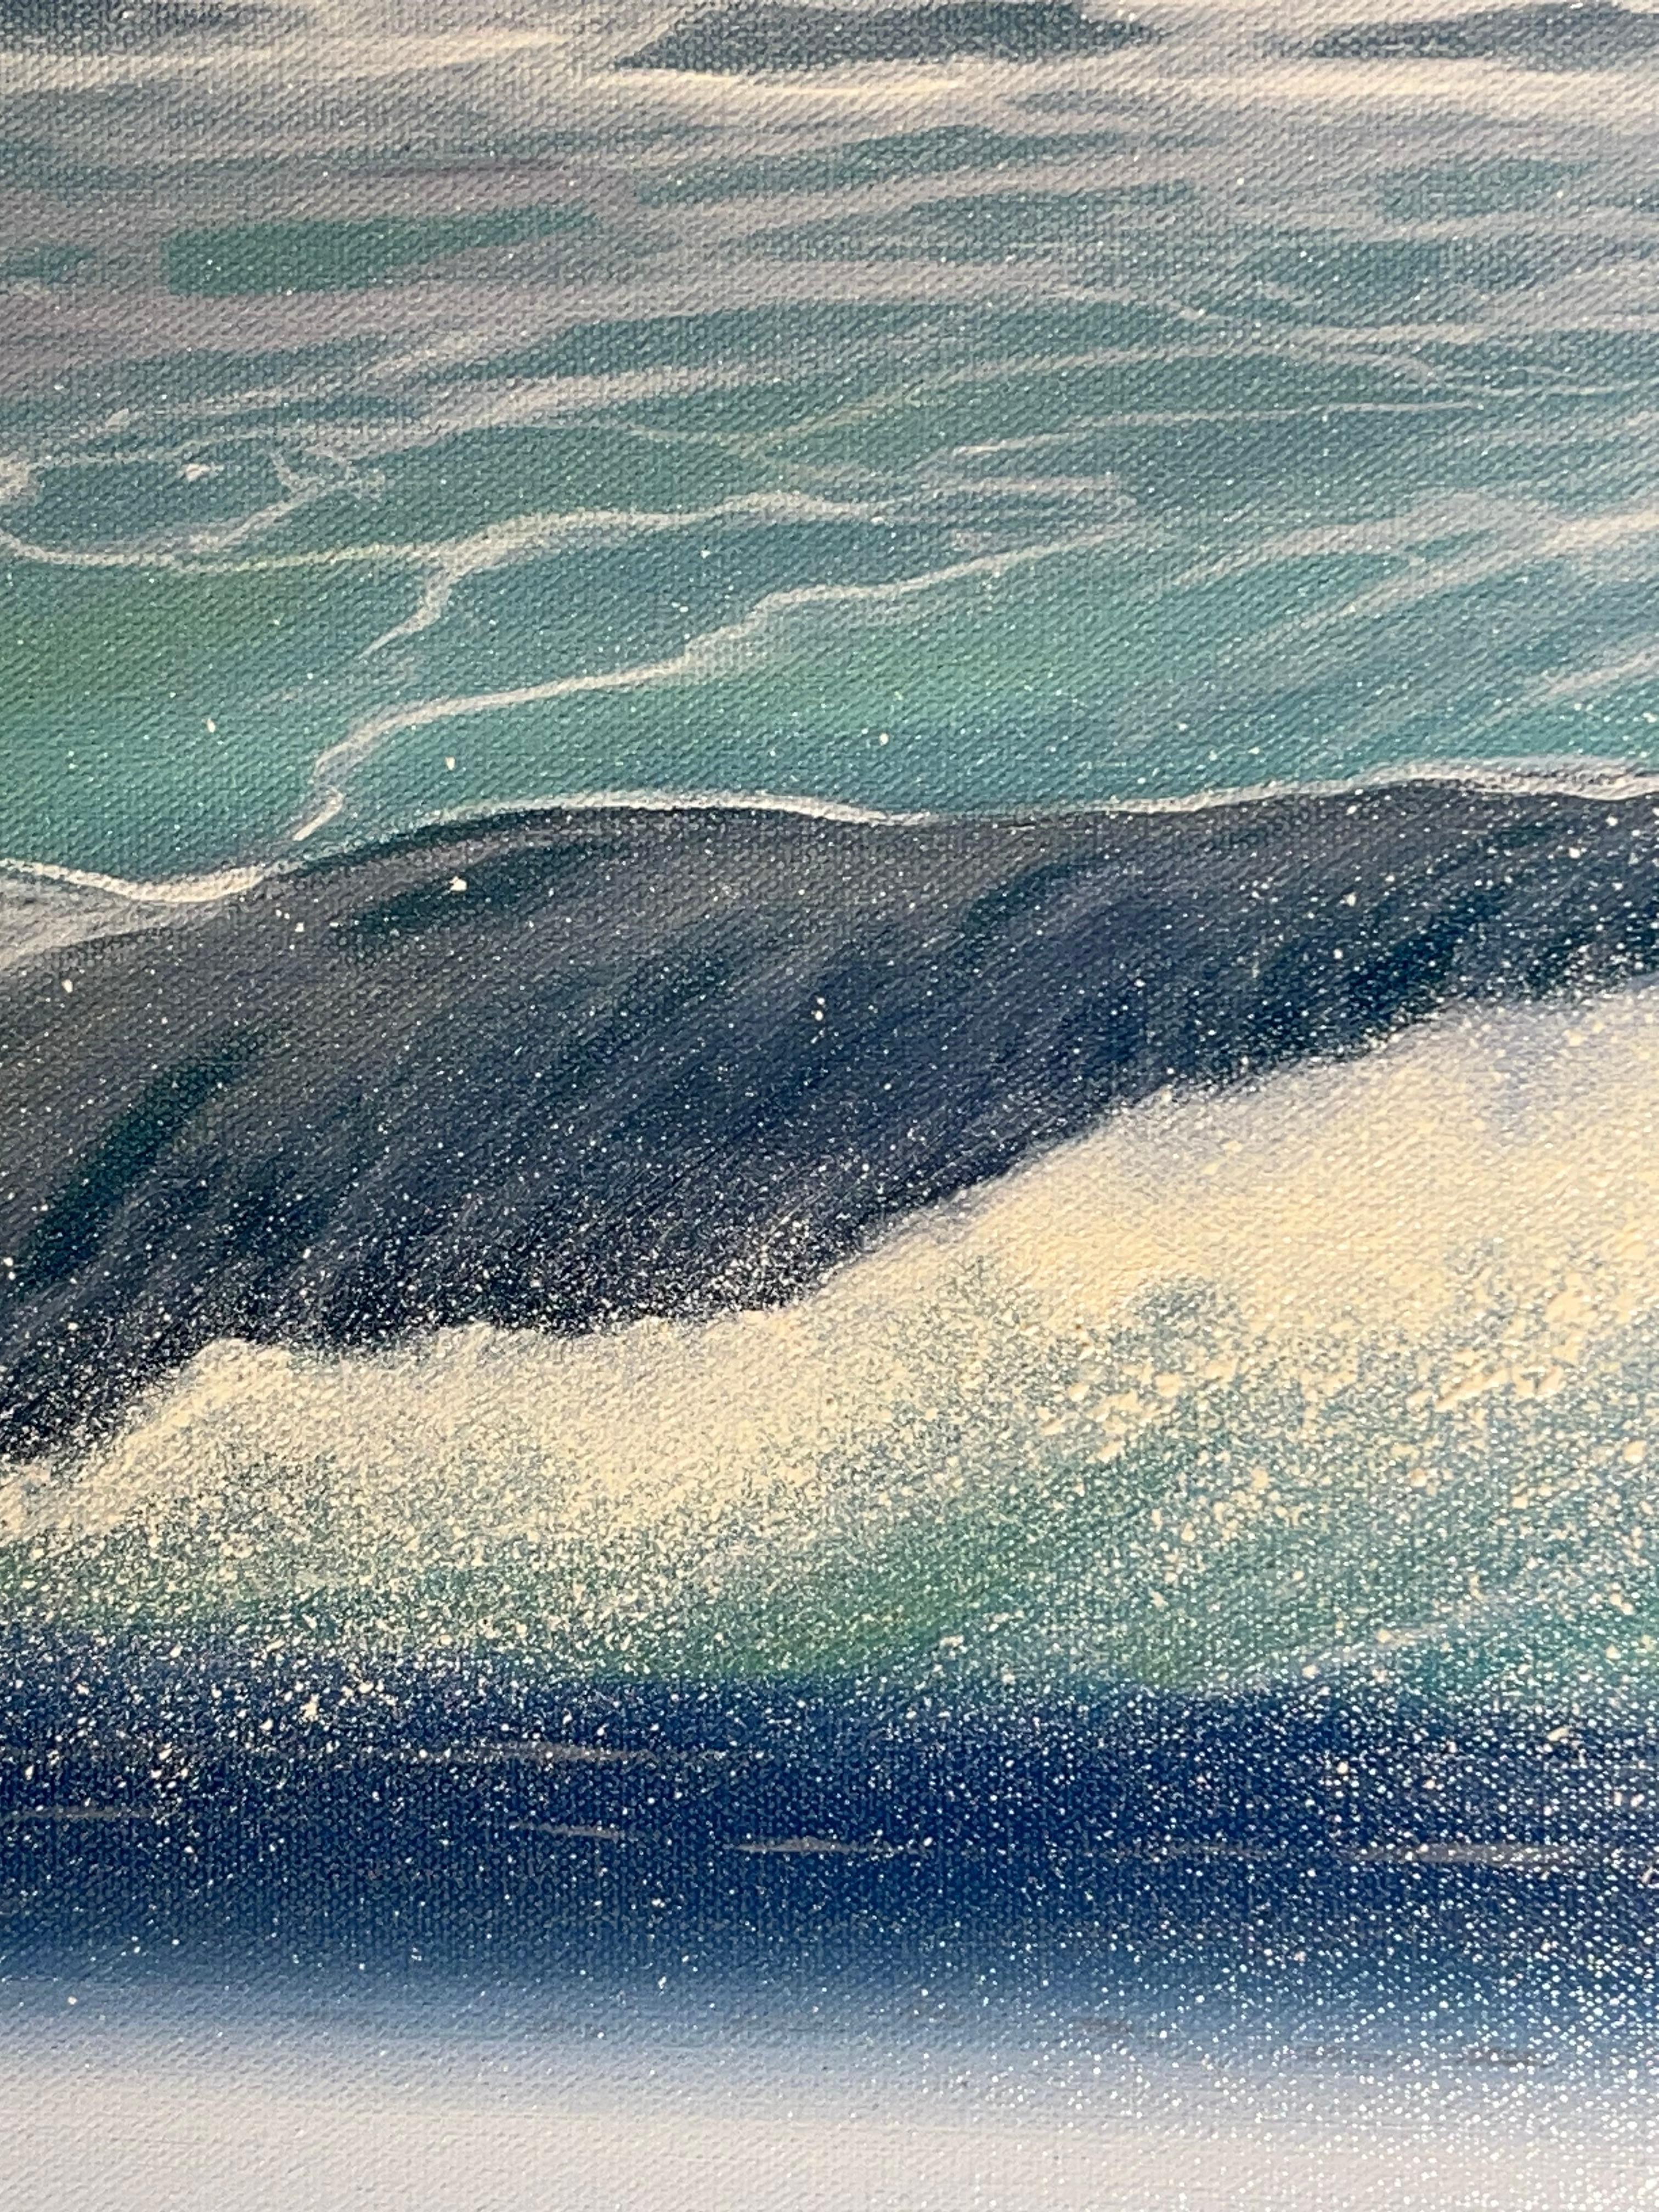 Exhale-ORIGINAL REALISM SEASCAPE Ocean oil painting-contemporary artwork For Sale 1